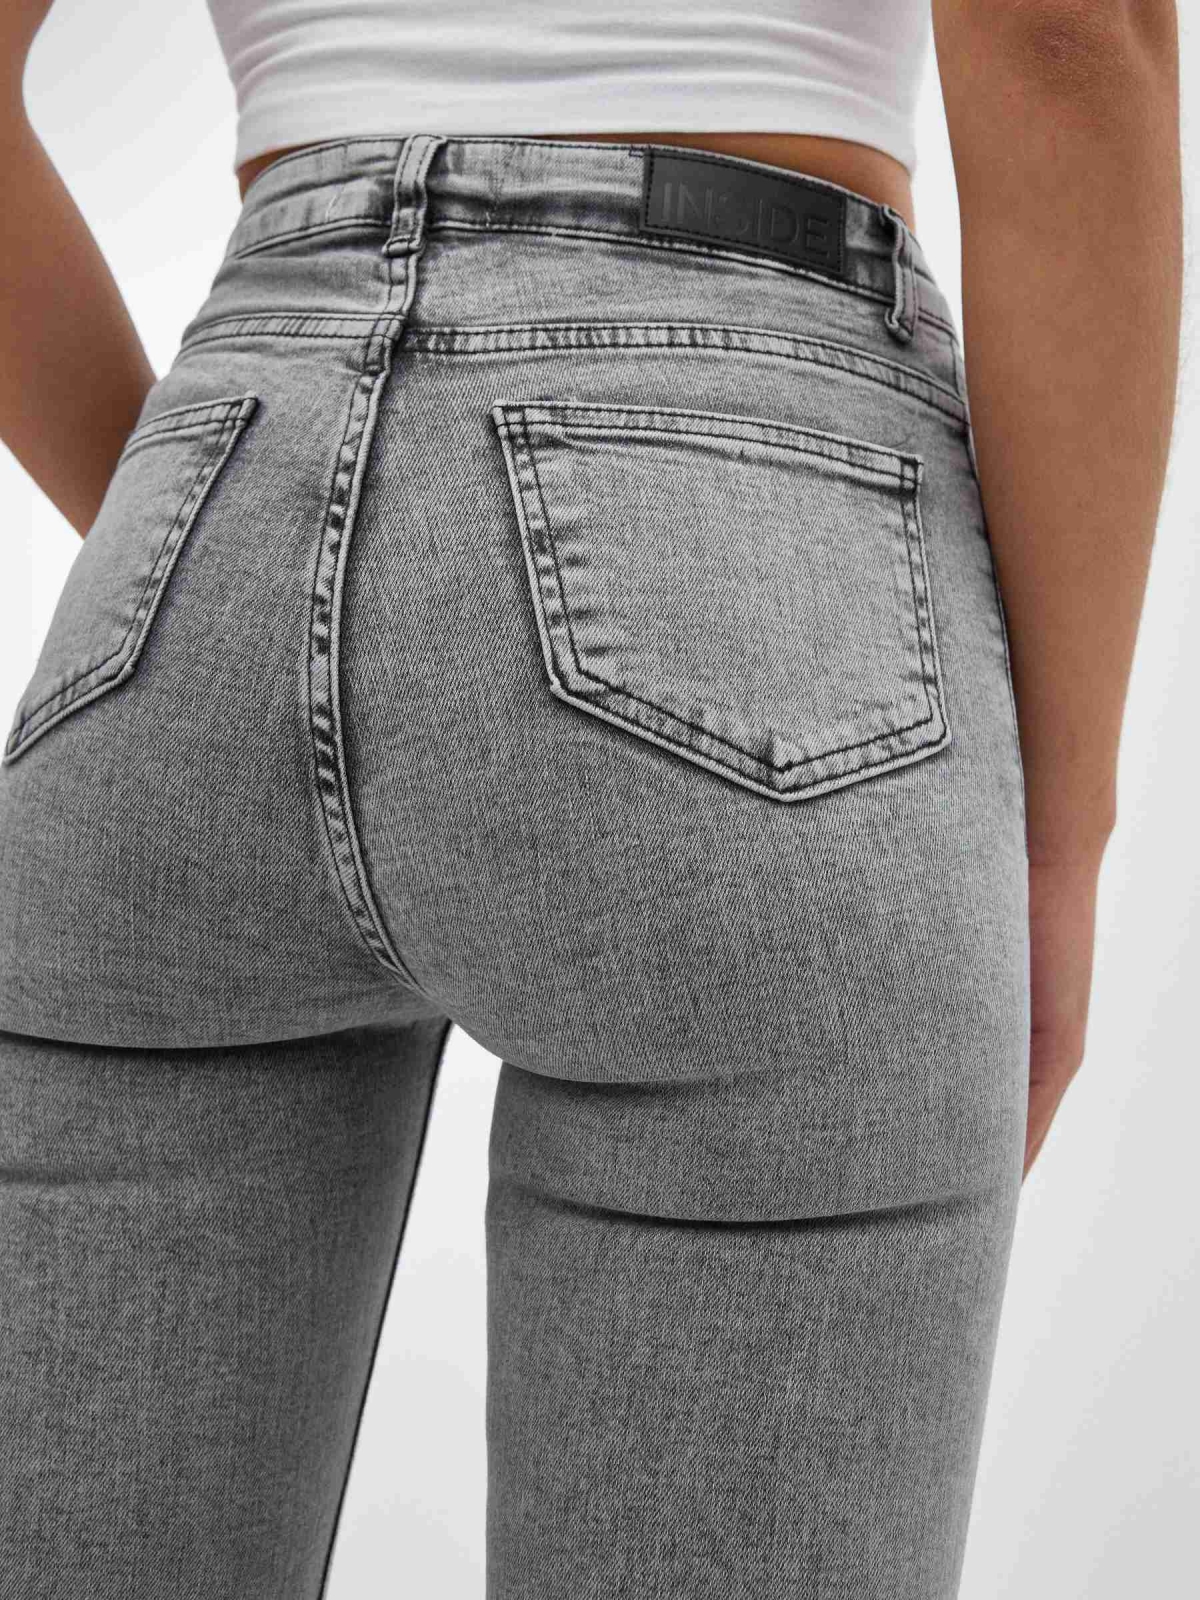 Grey skinny jeans medium grey detail view